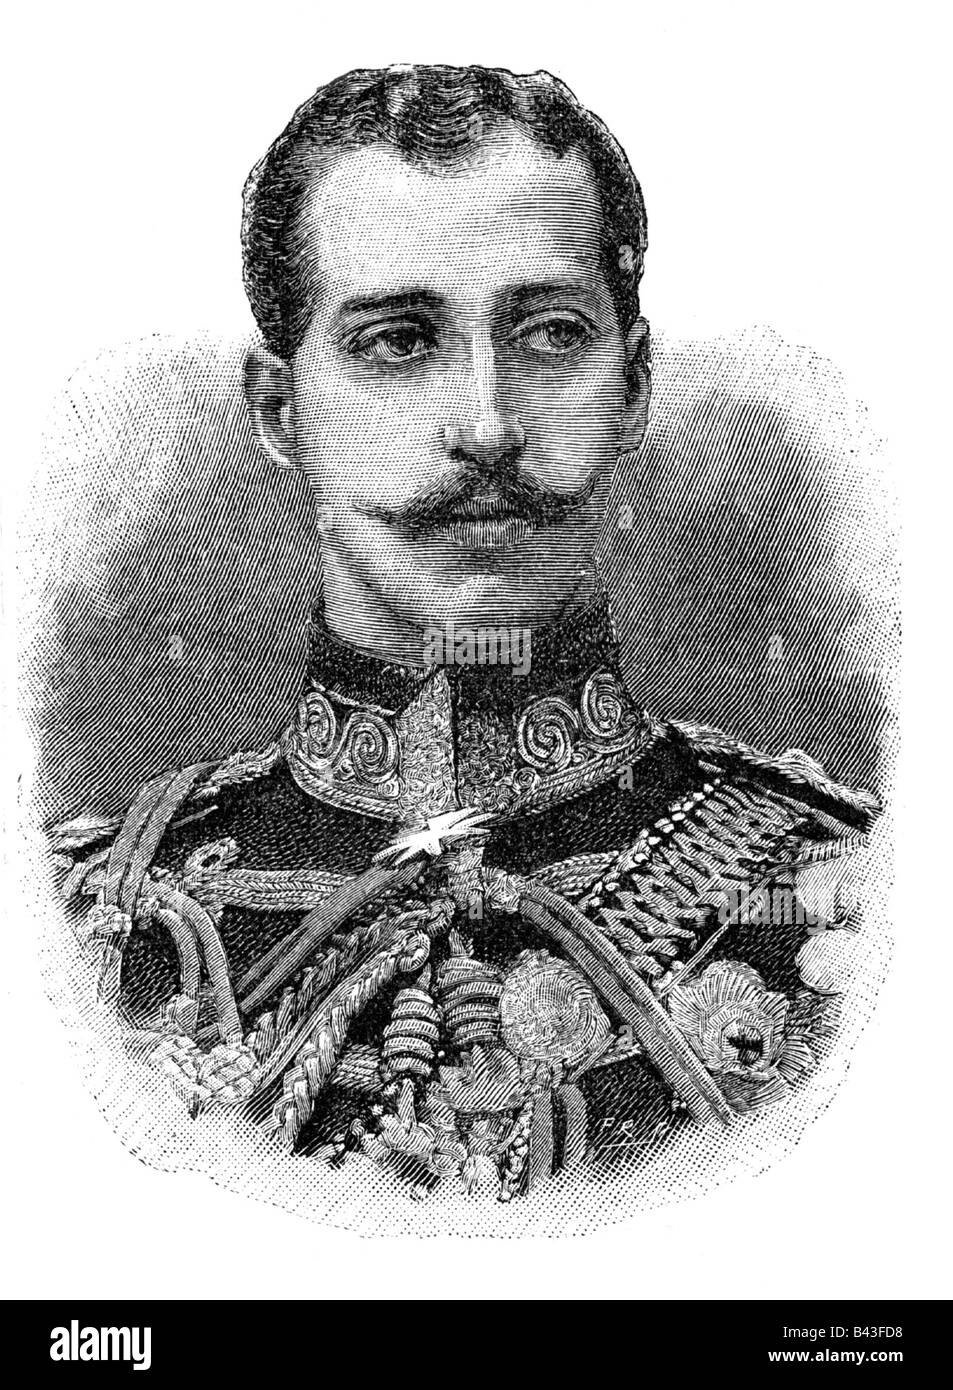 <b>Albert Victor</b>, 8.1.1864 - 14.1.1892, Duke of Clarence and Avondale - albert-victor-811864-1411892-duke-of-clarence-and-avondale-portrait-B43FD8